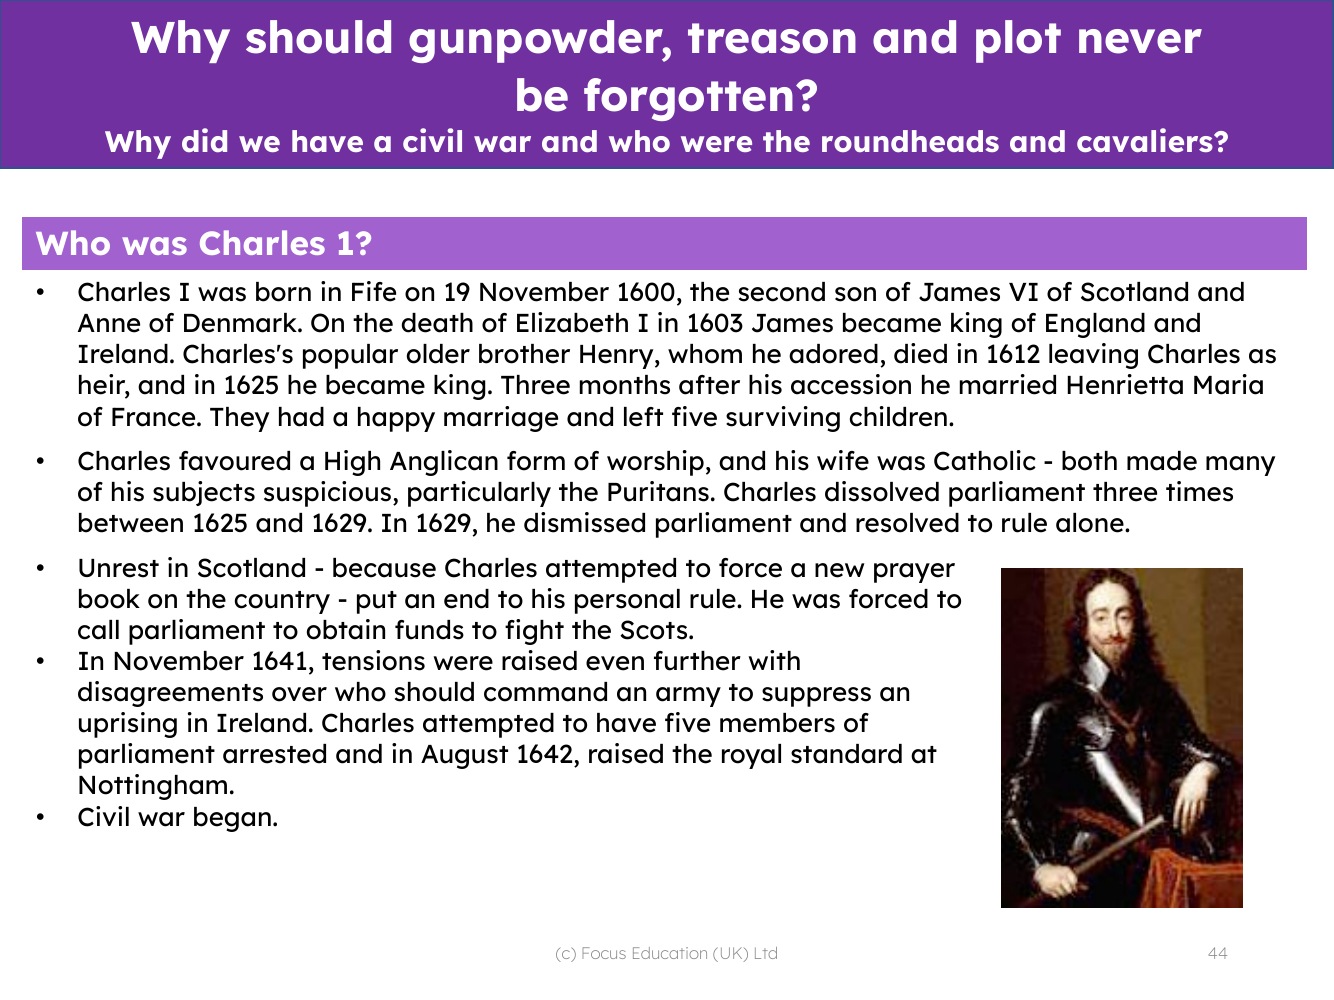 Charles I - Info sheet